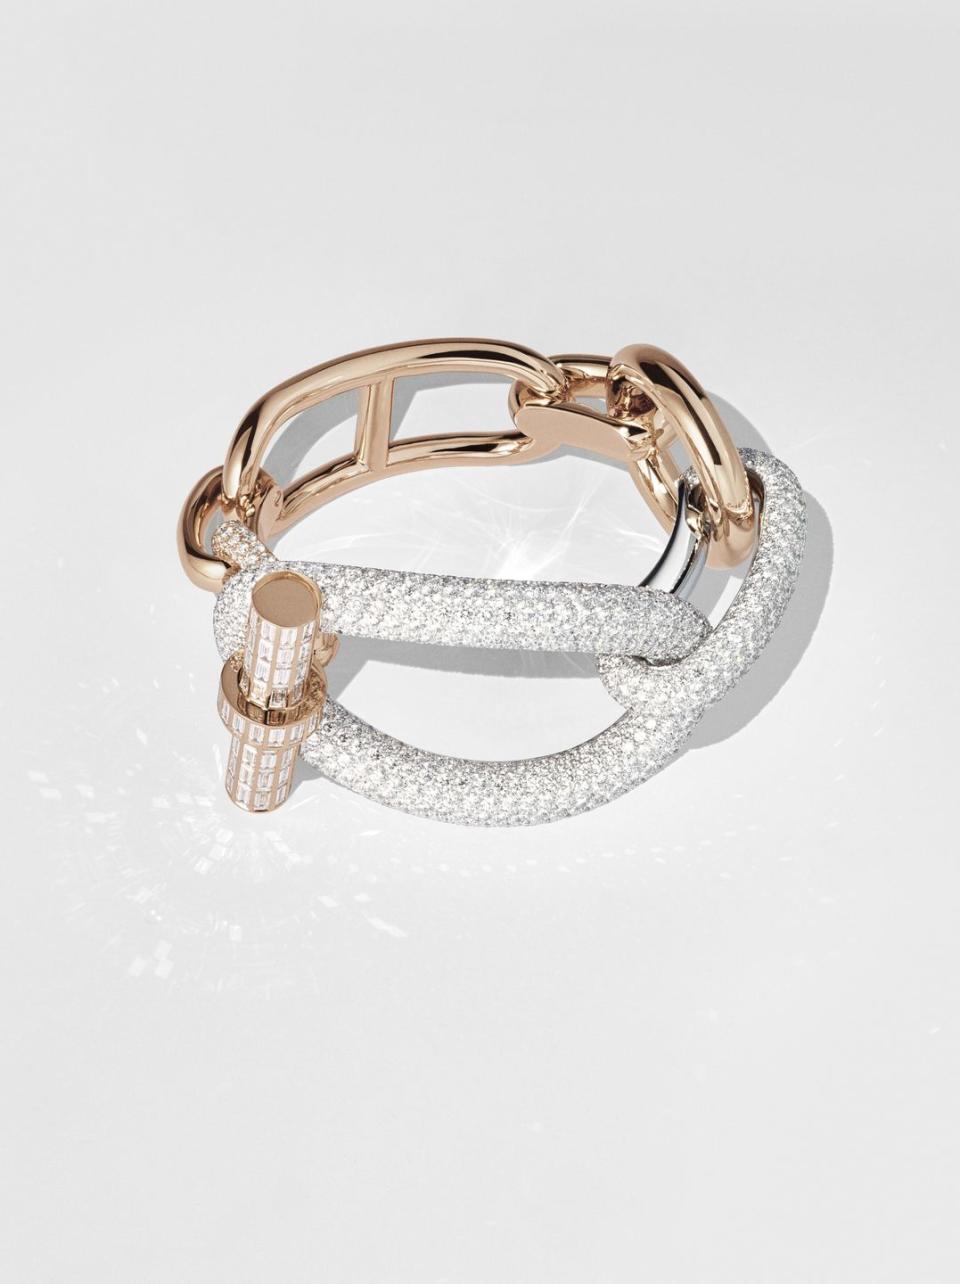 3) Hermès Adage Bracelet